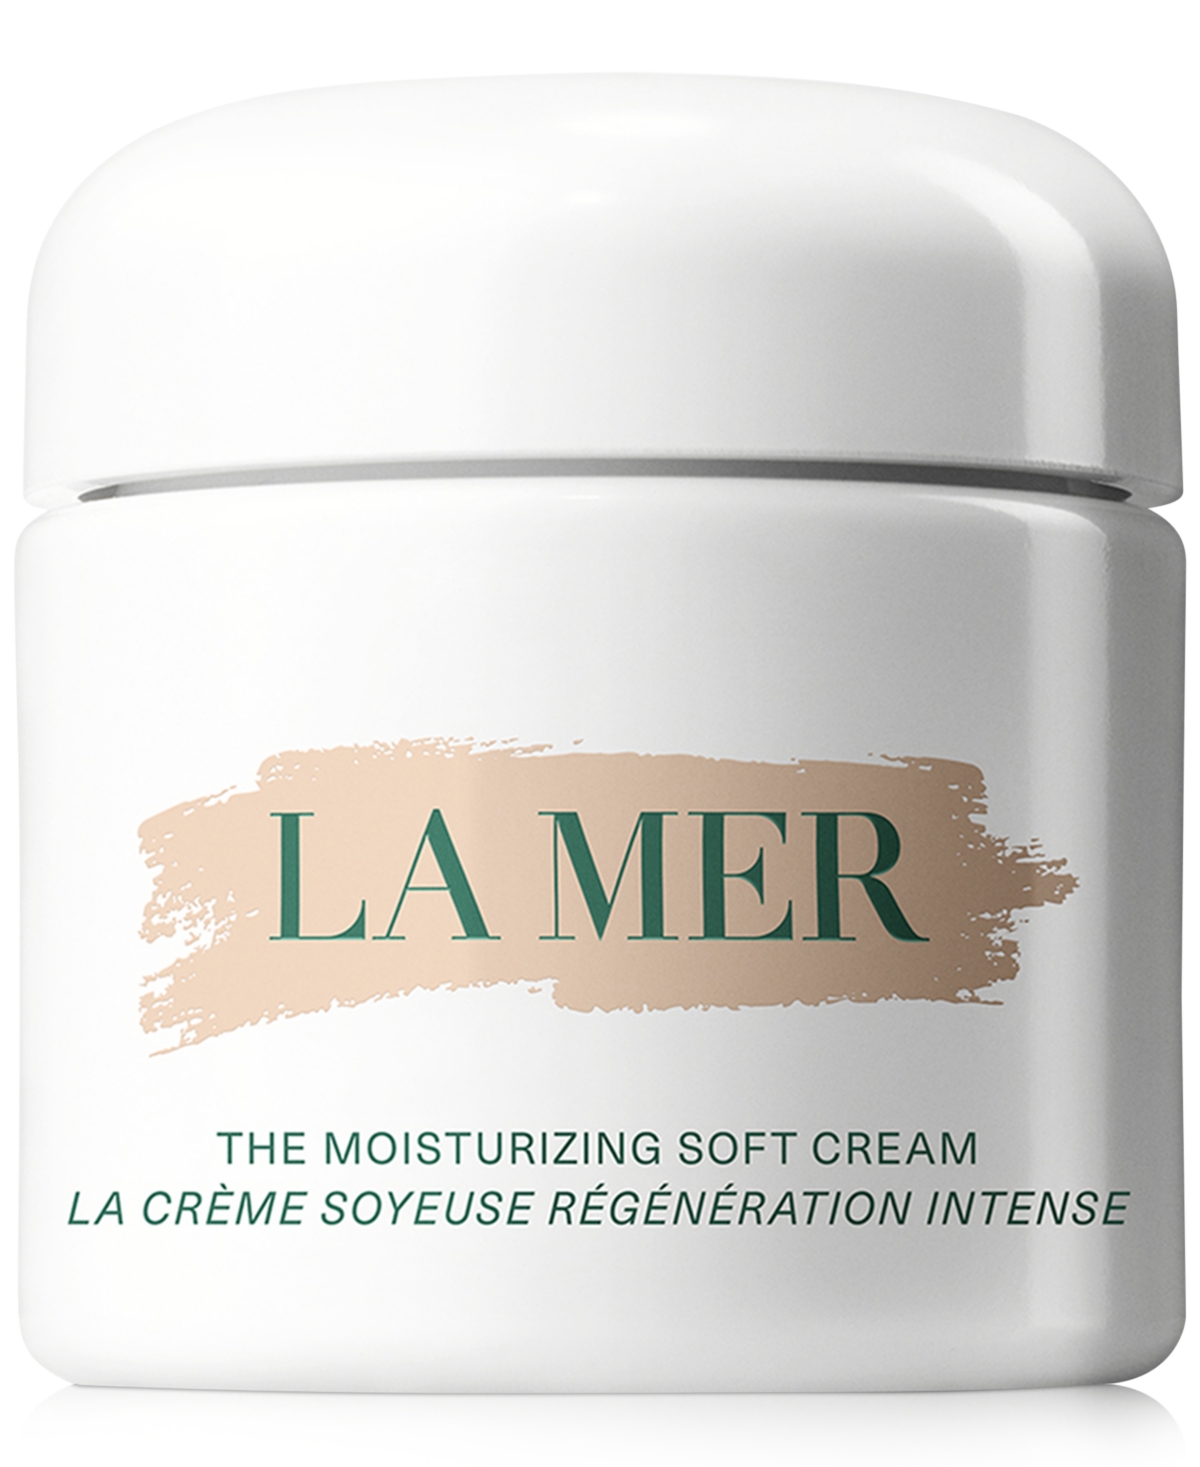 La Mer The Moisturizing Soft Cream, 3.4 Oz.